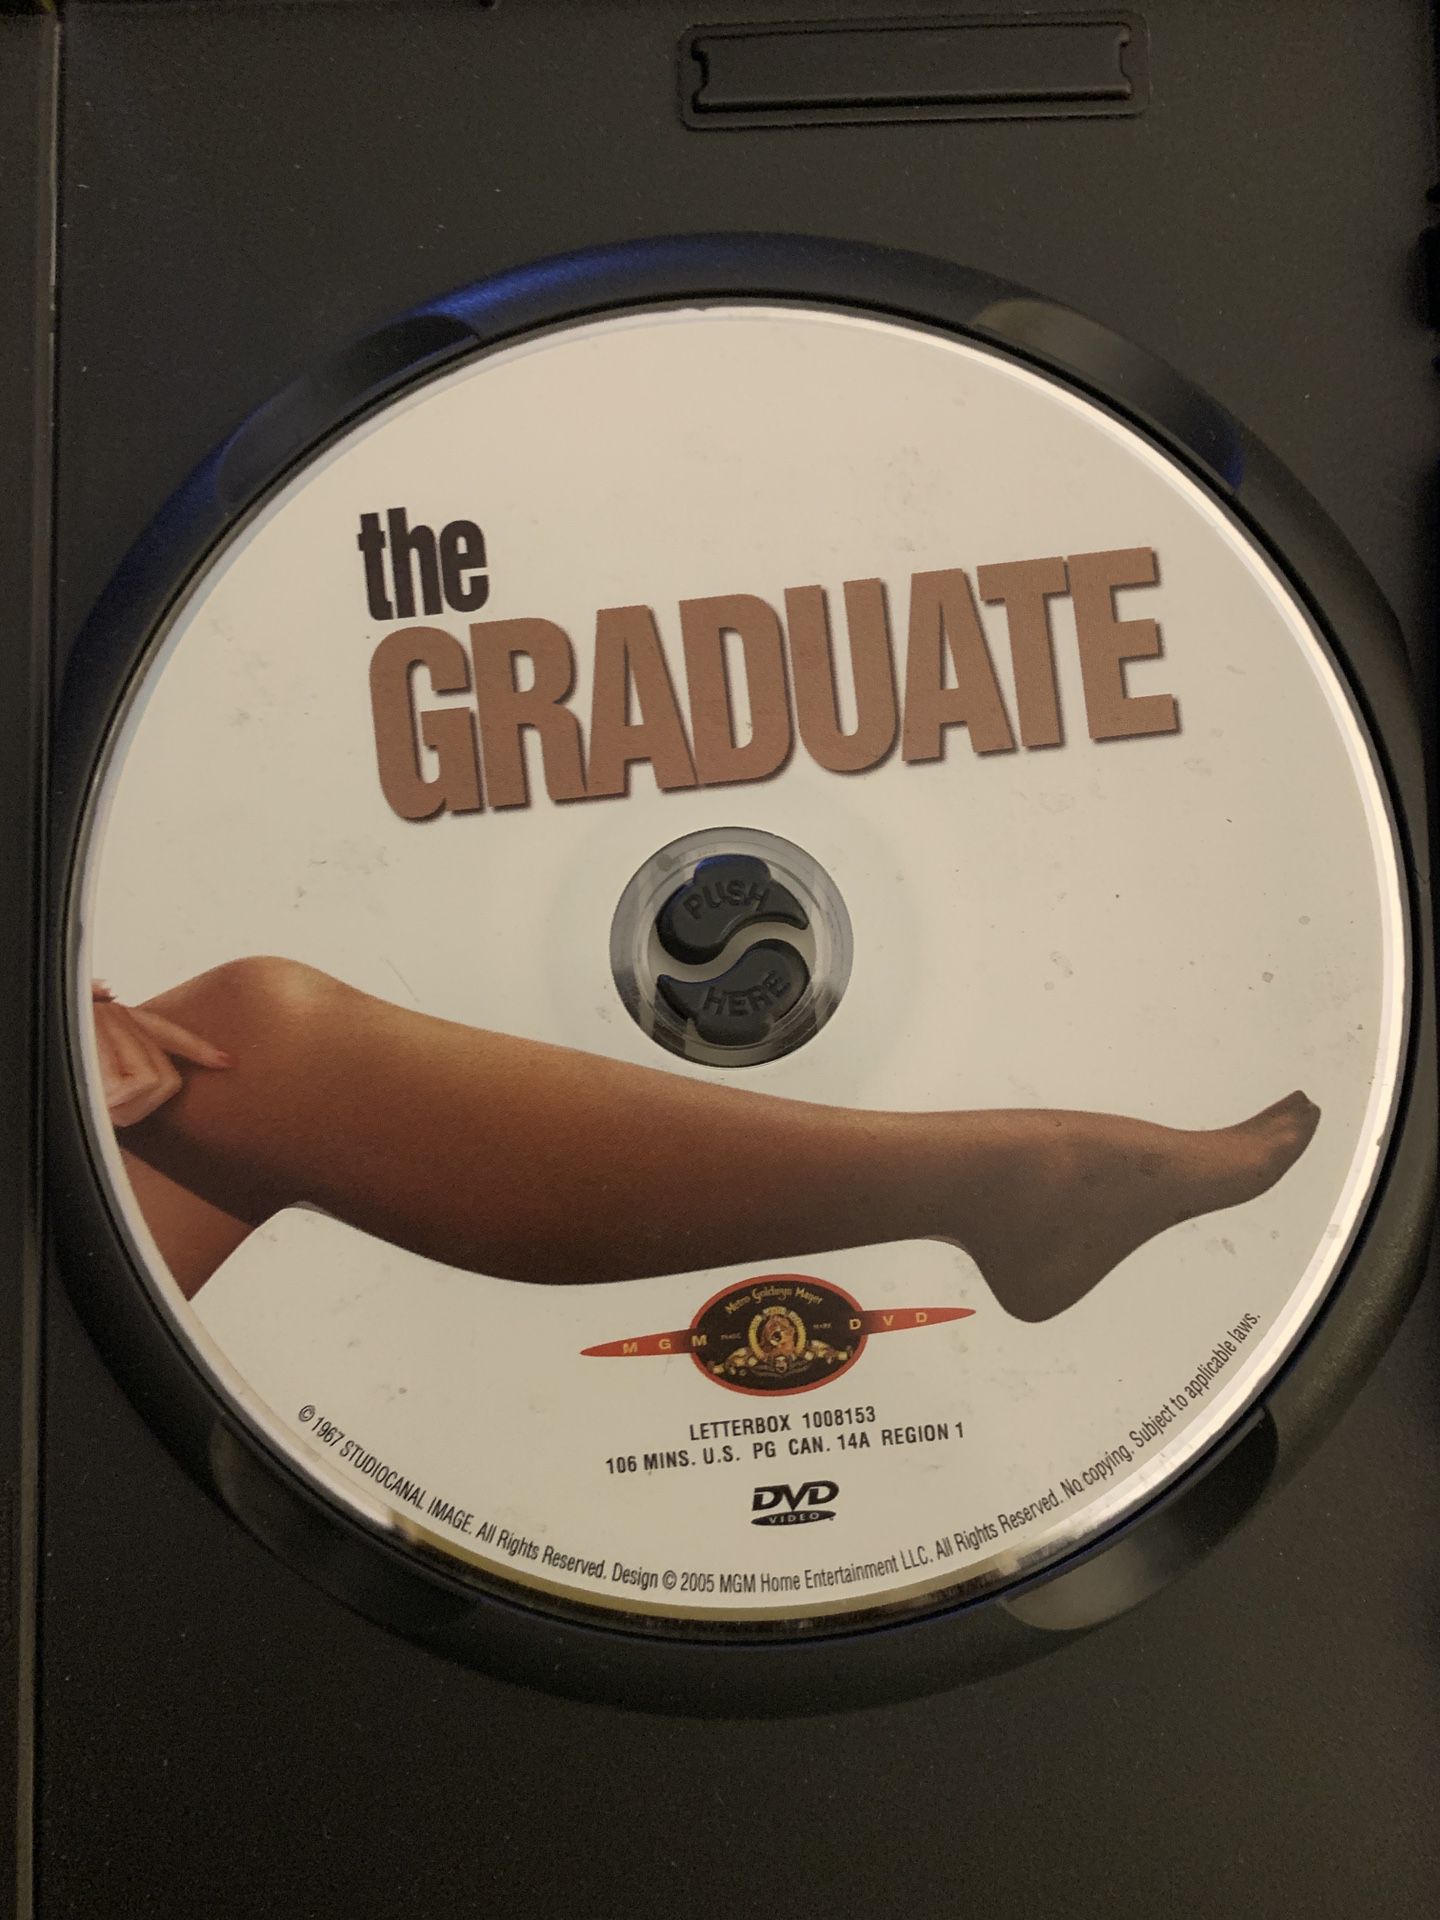 The Graduate DVD